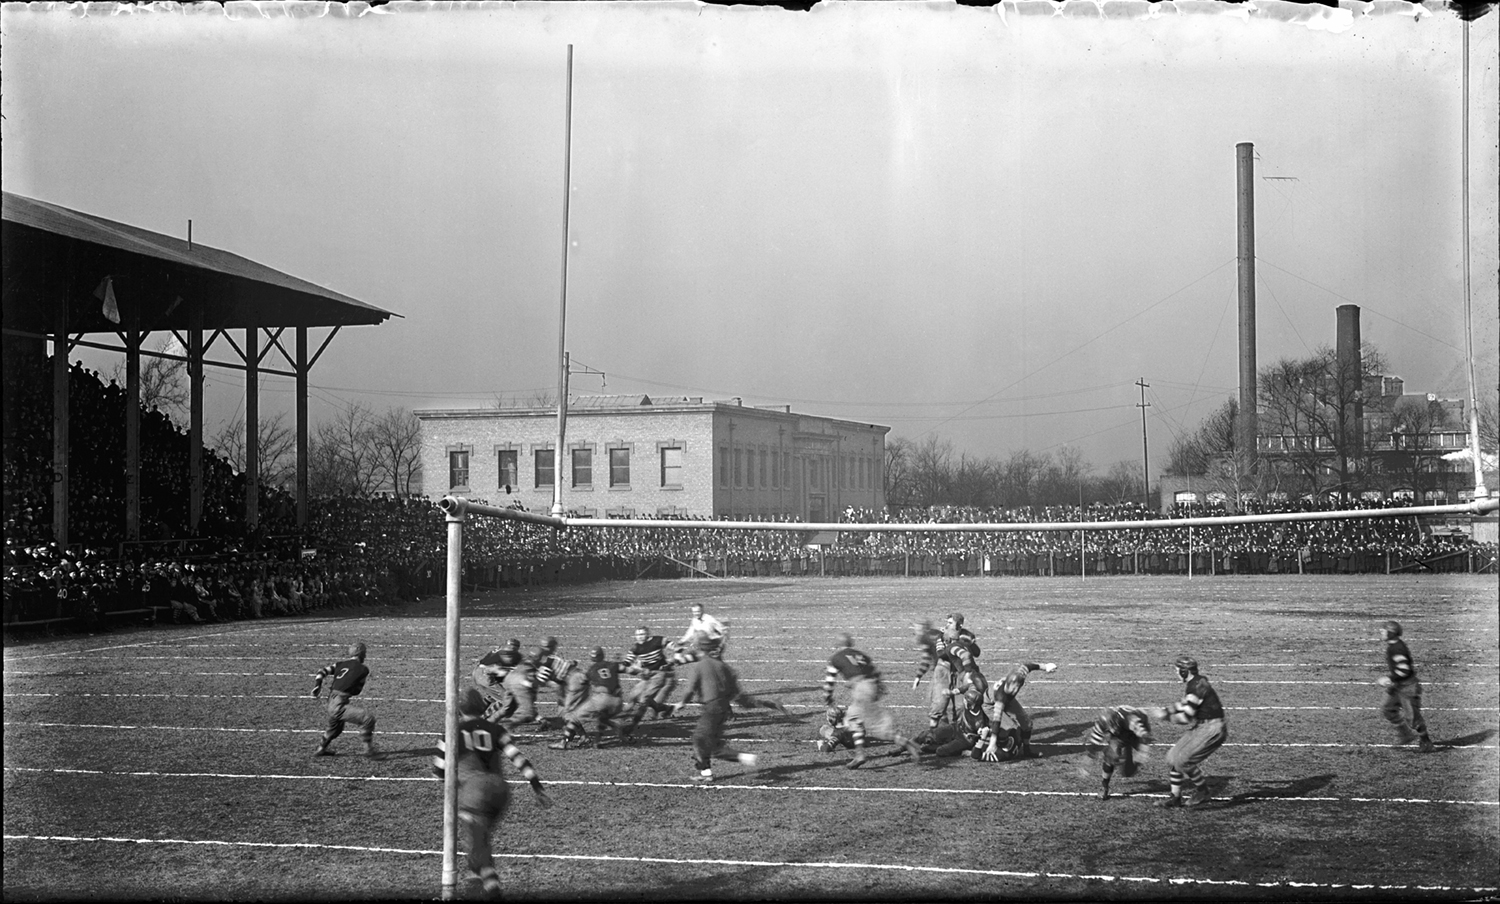  Case Western Reserve University football game, 1915 